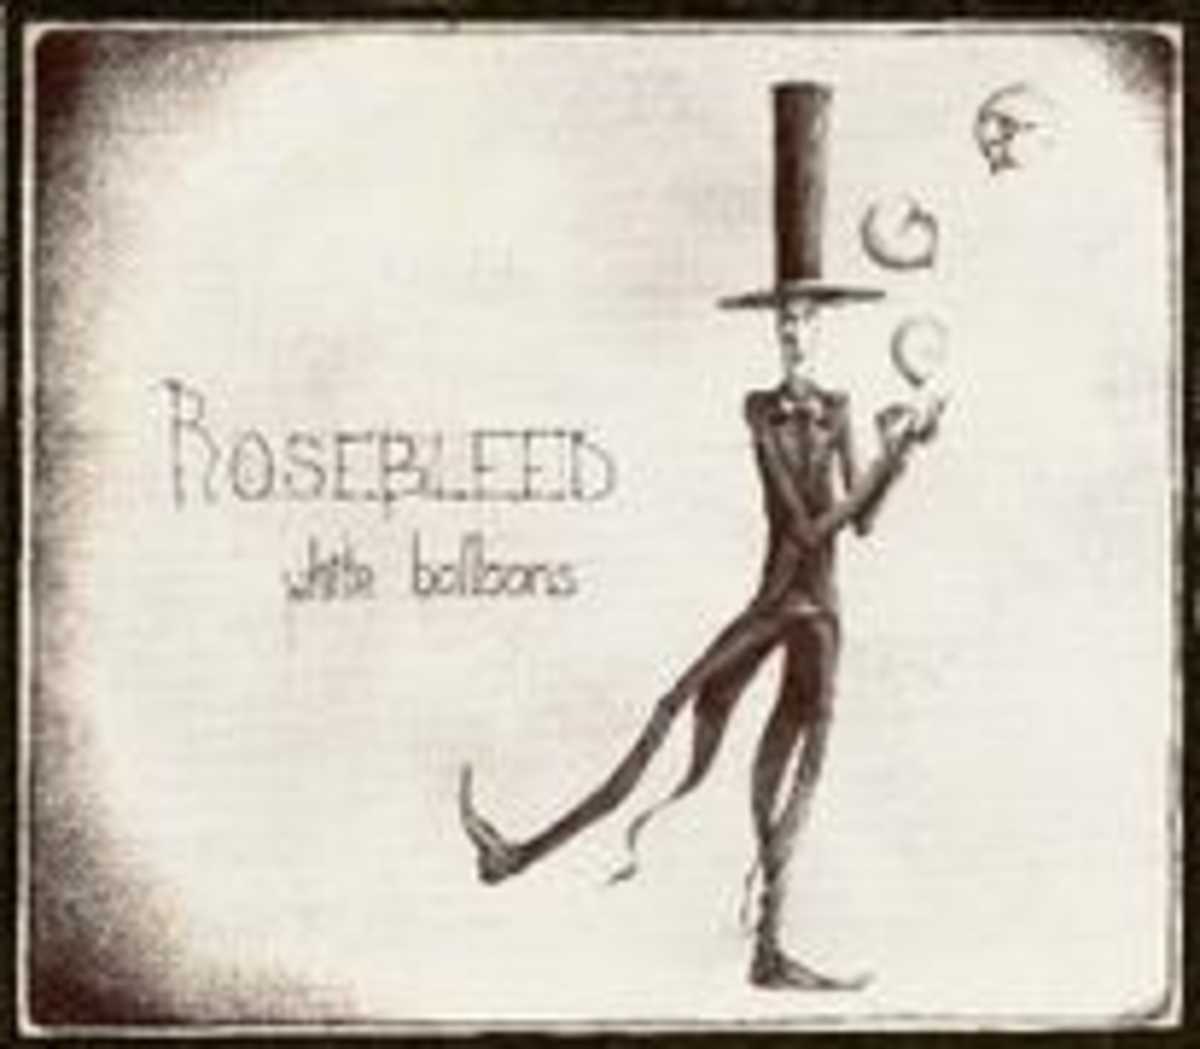 Rosebleed